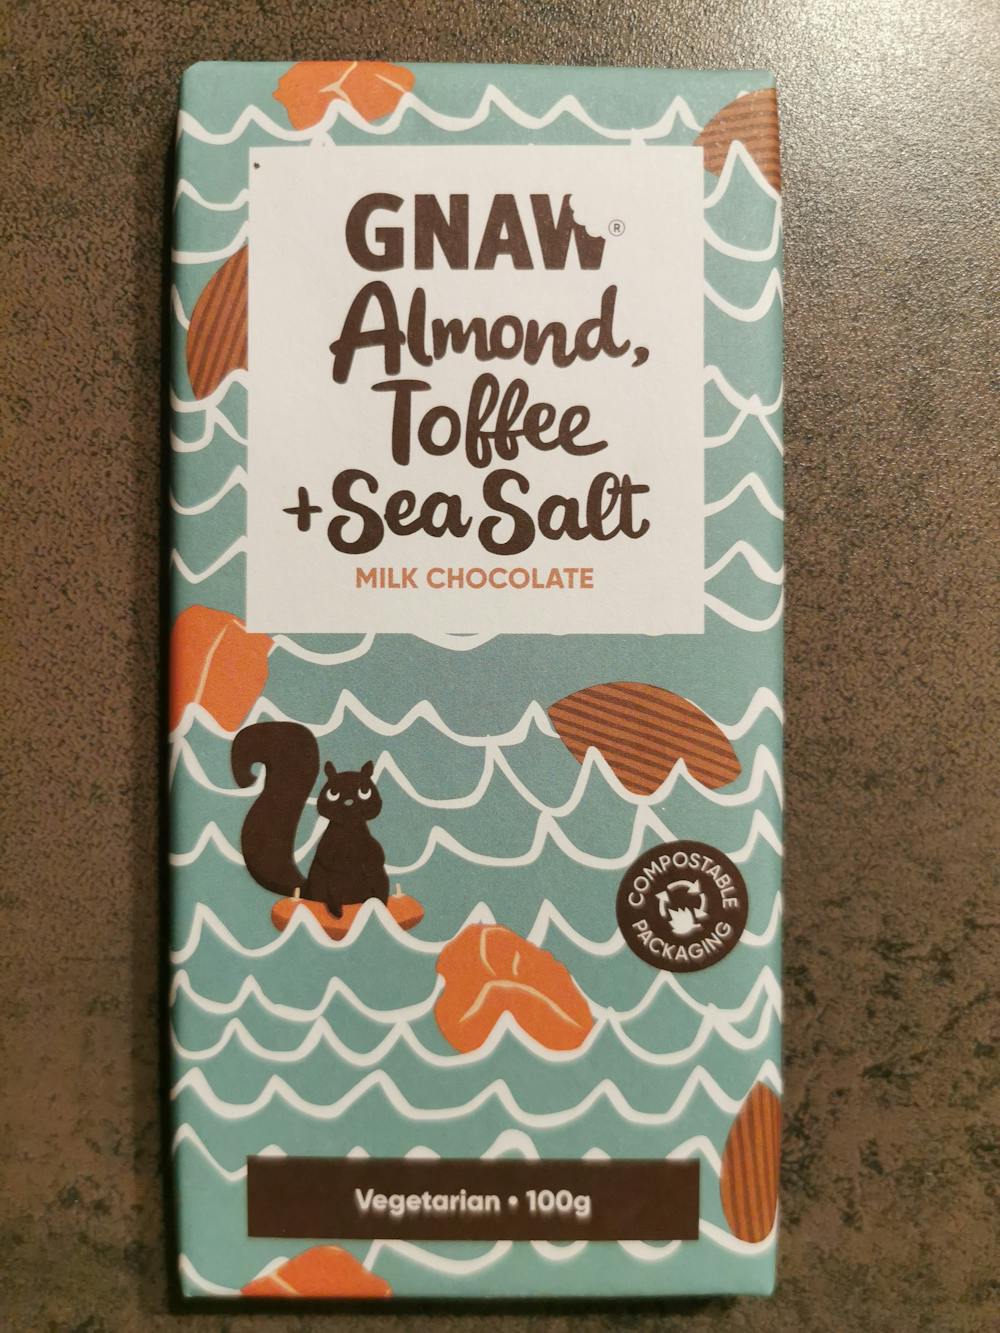 Almond, toffee + sea salt, Gnaw